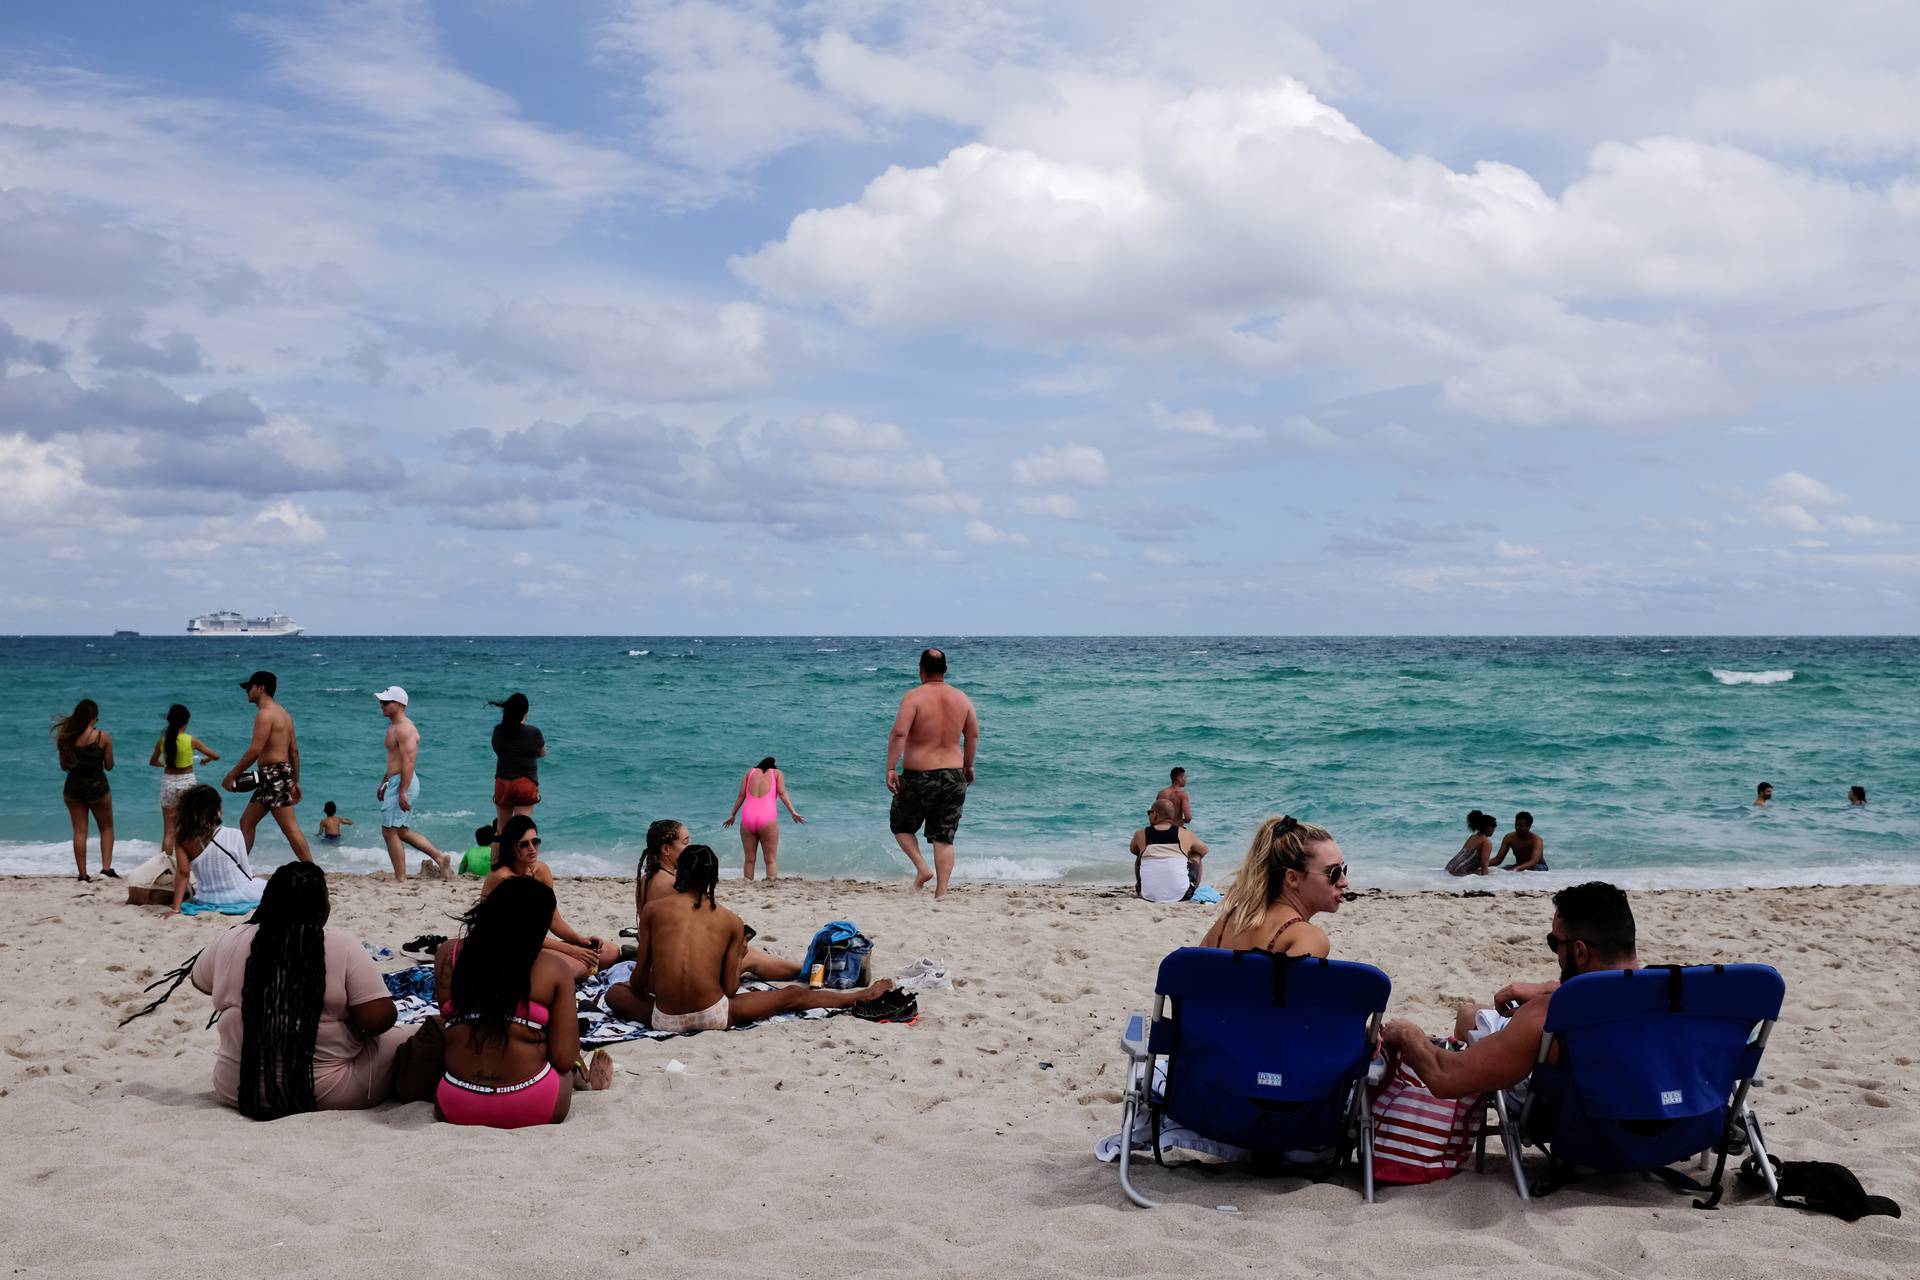 Despite COVID risks, spring breakers flock to South Florida